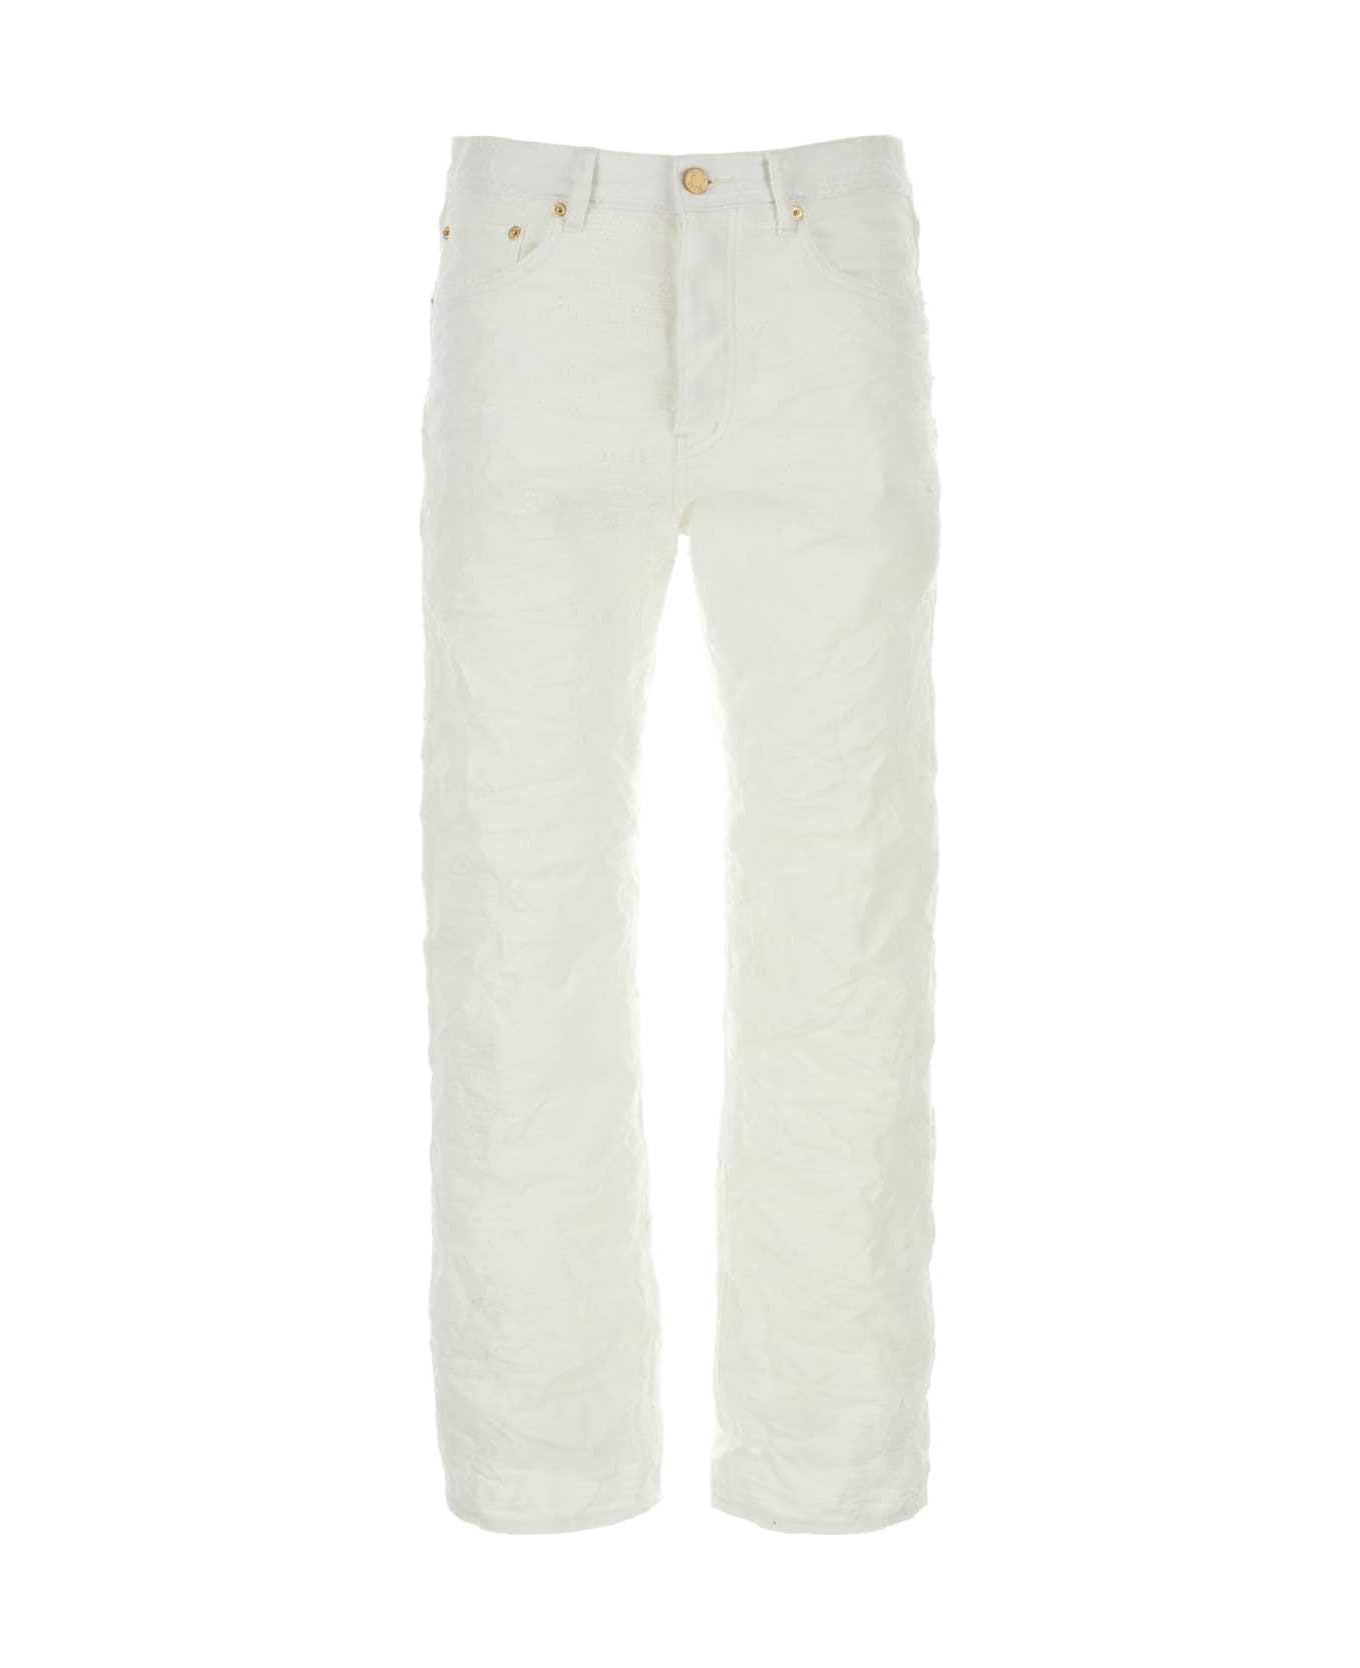 Purple Brand White Denim Jeans - OFFWHITE ボトムス